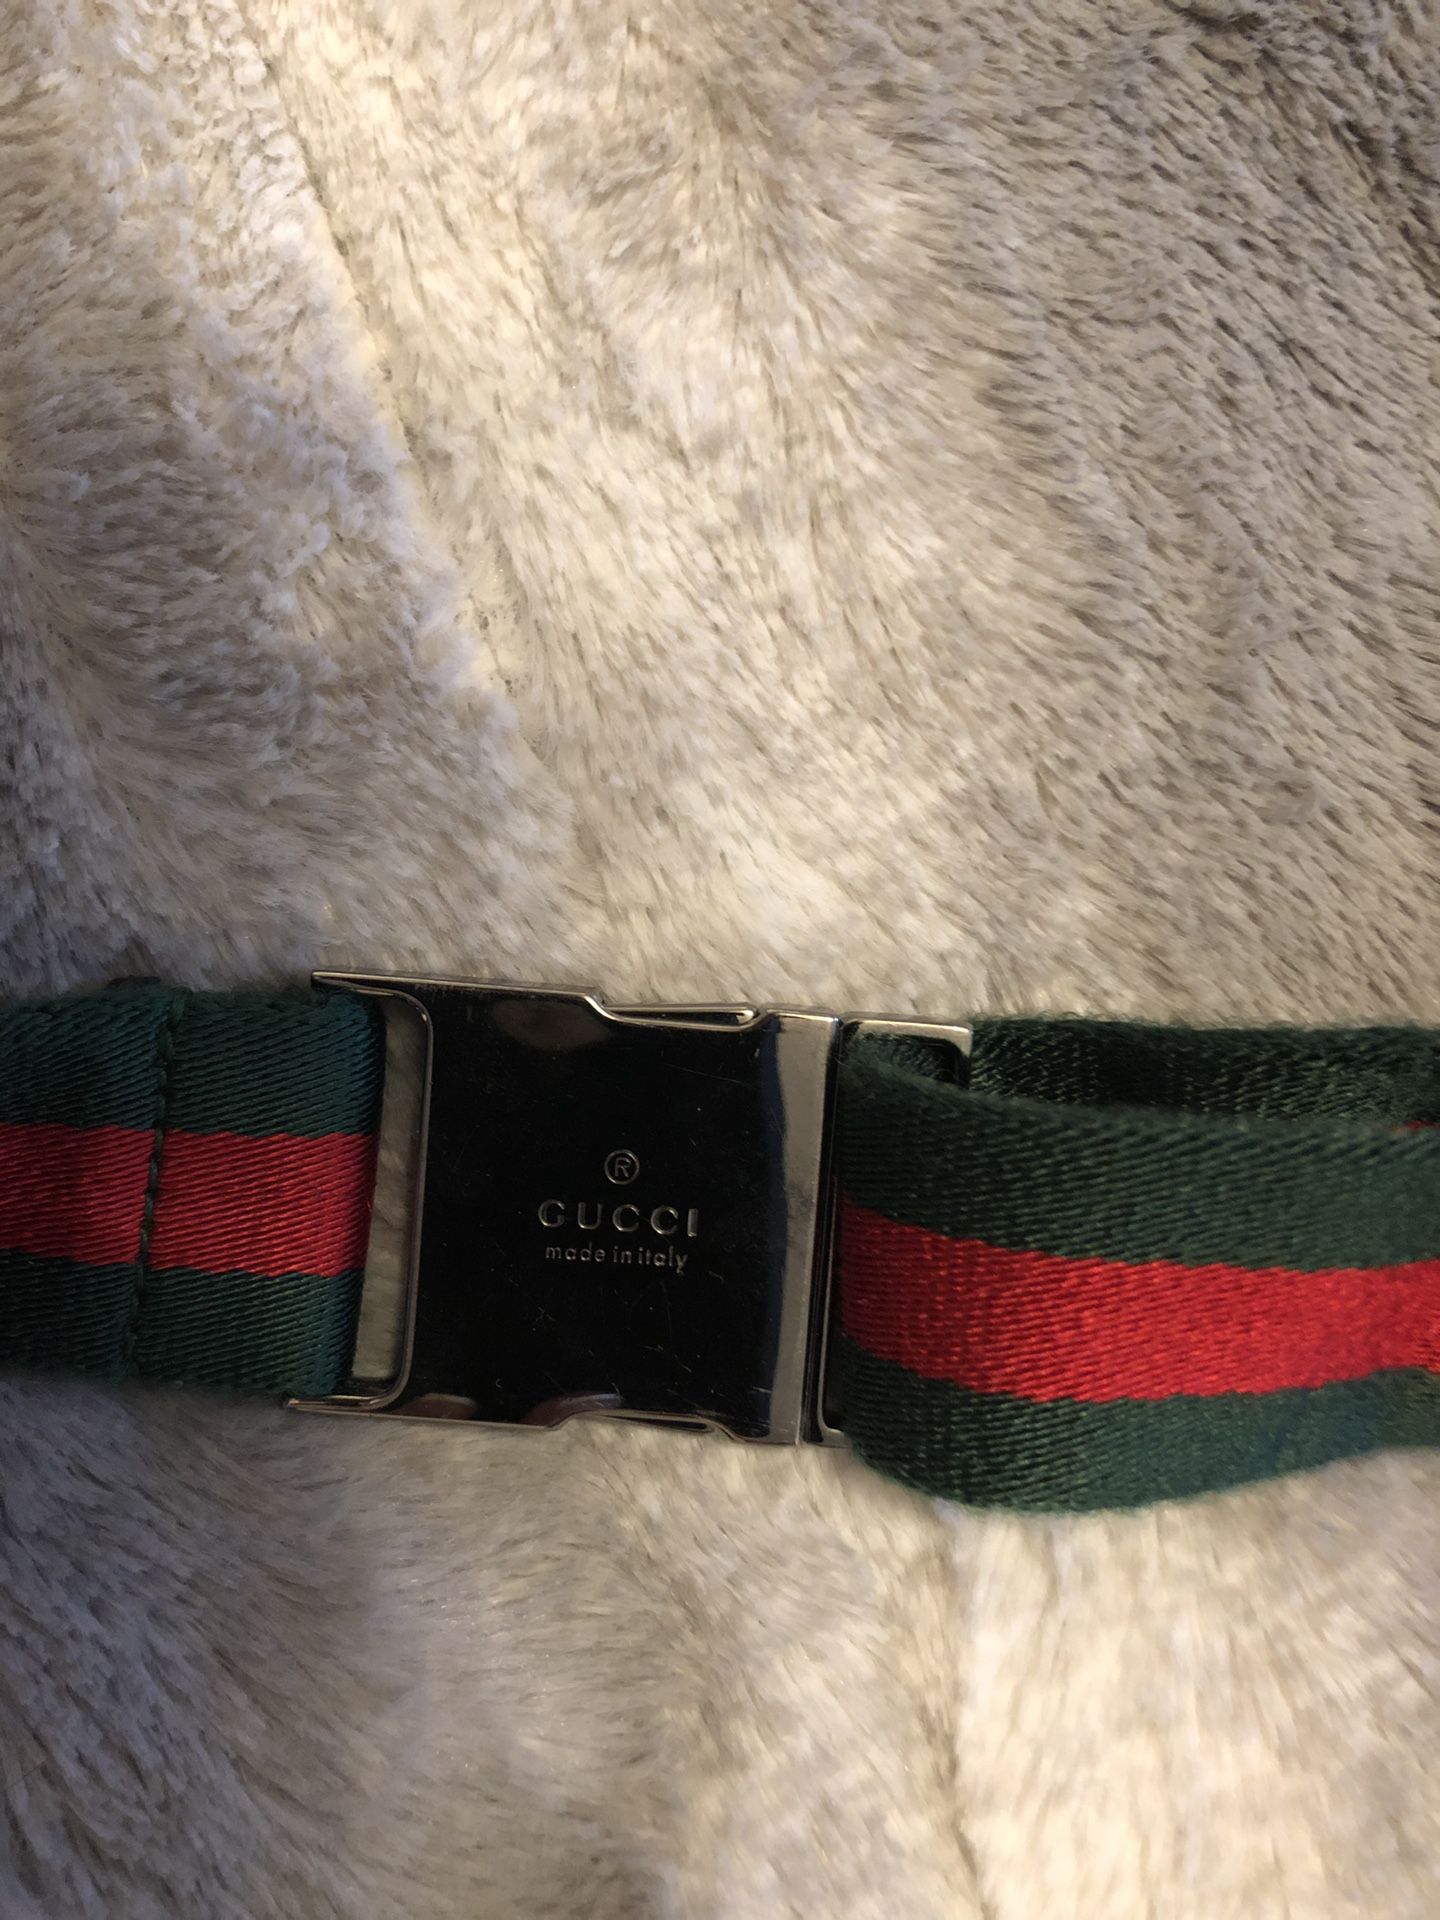 100% authentic Gucci belt/fannypack